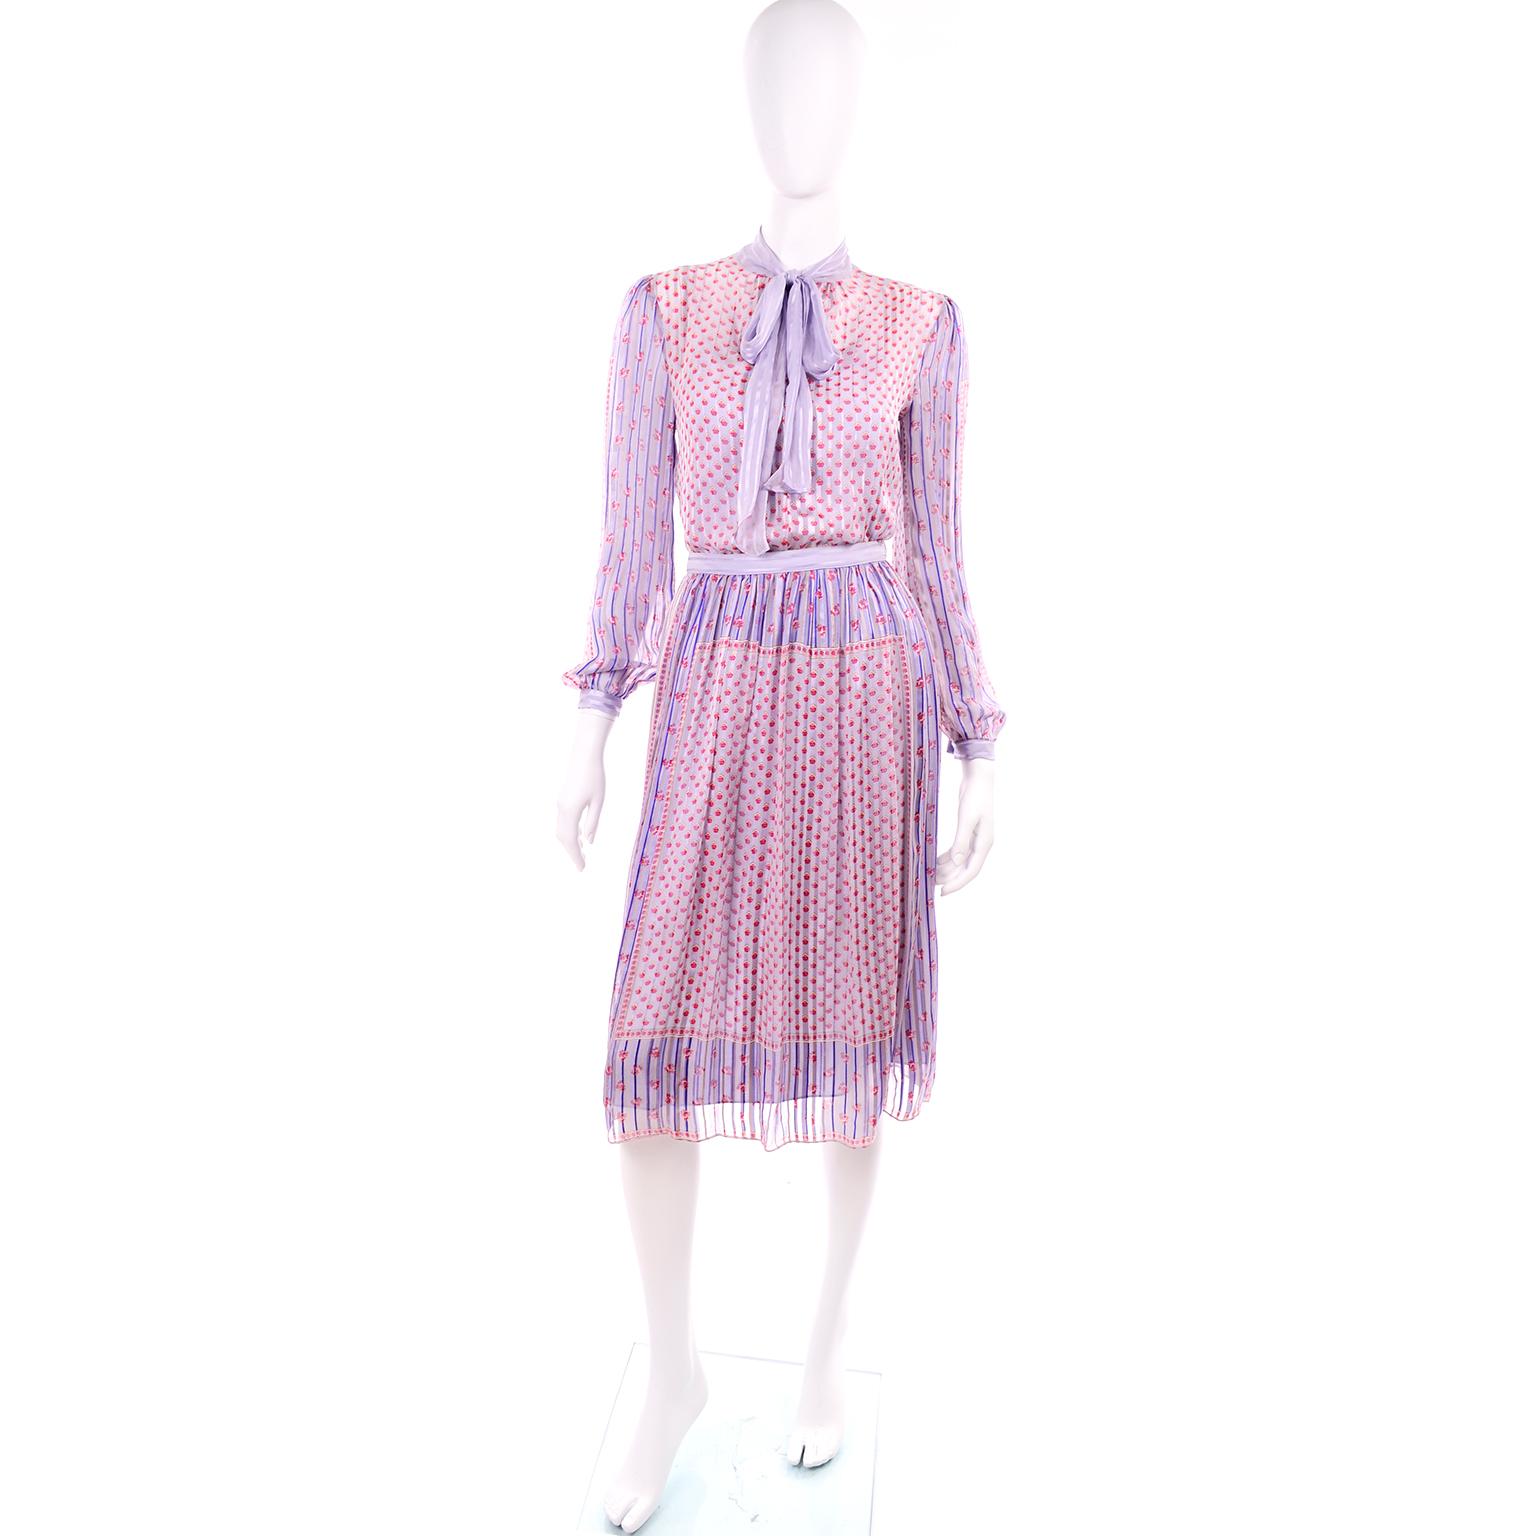 Designer Silk Chiffon 2 Pc Dress in Purple Yellow Pink Floral Print Pattern Mix 1